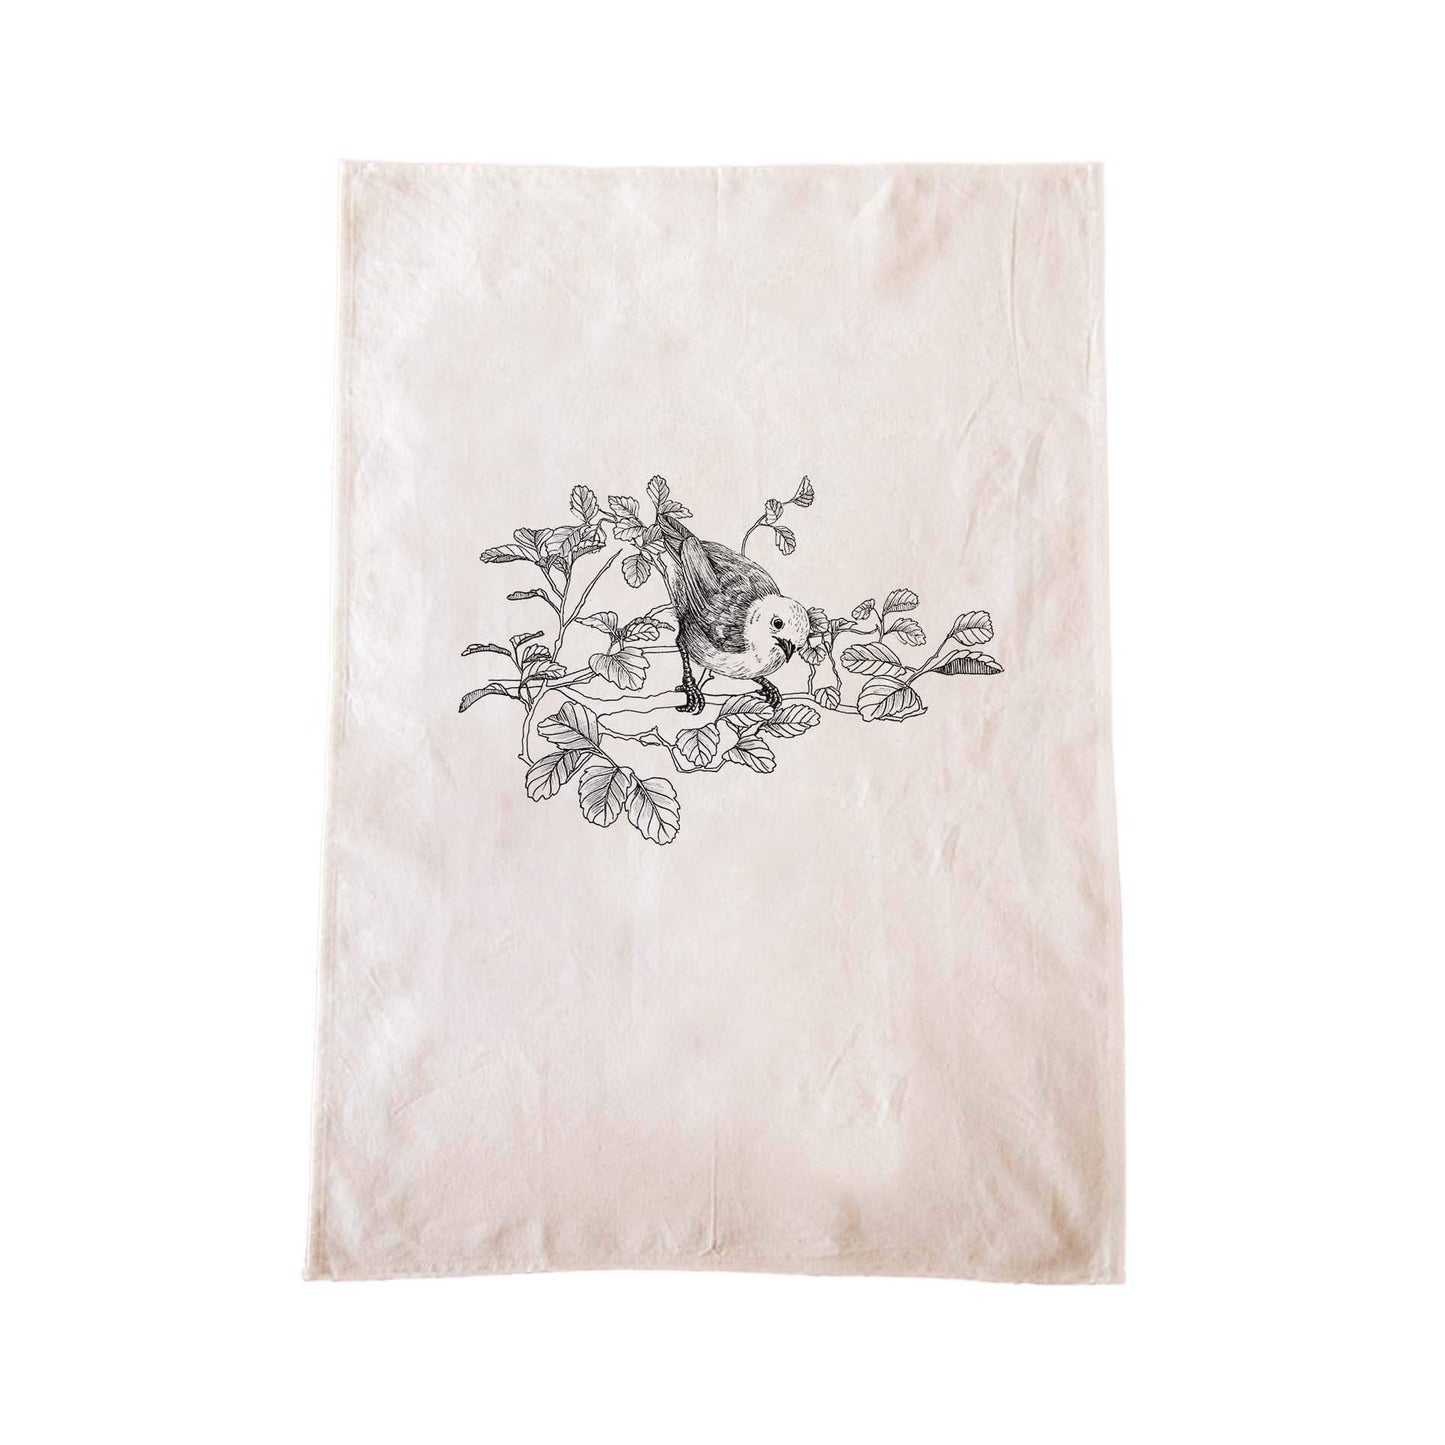 Off-white cotton tea towel with a screen printed Mōhua/Yellowhead design.